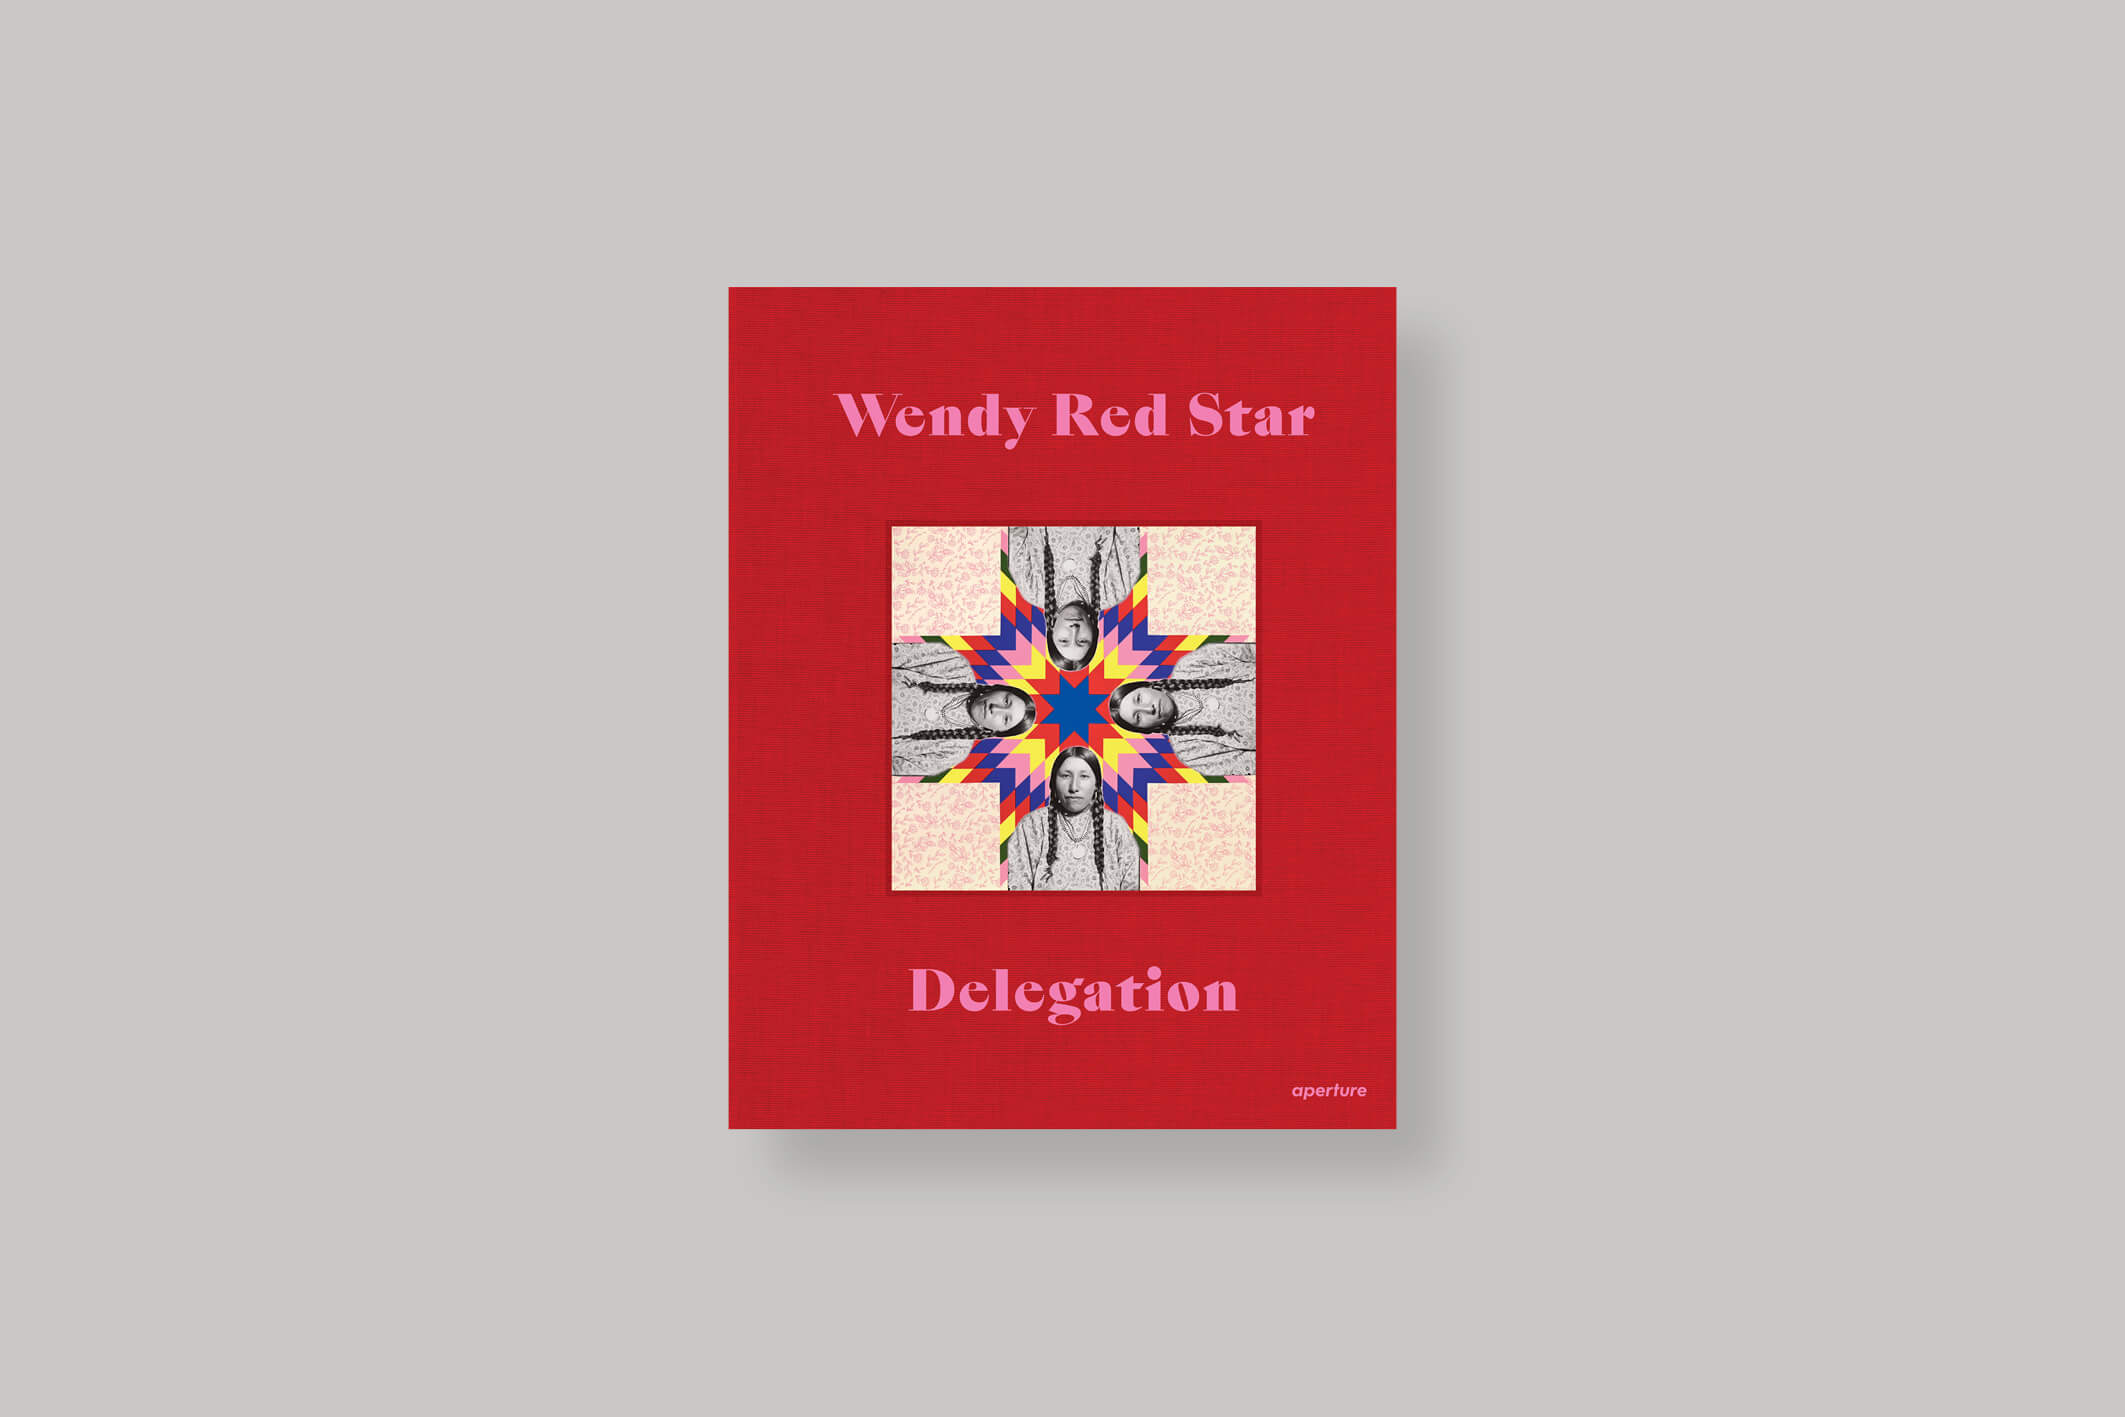 delegation-wendy-red-star-aperture-cover